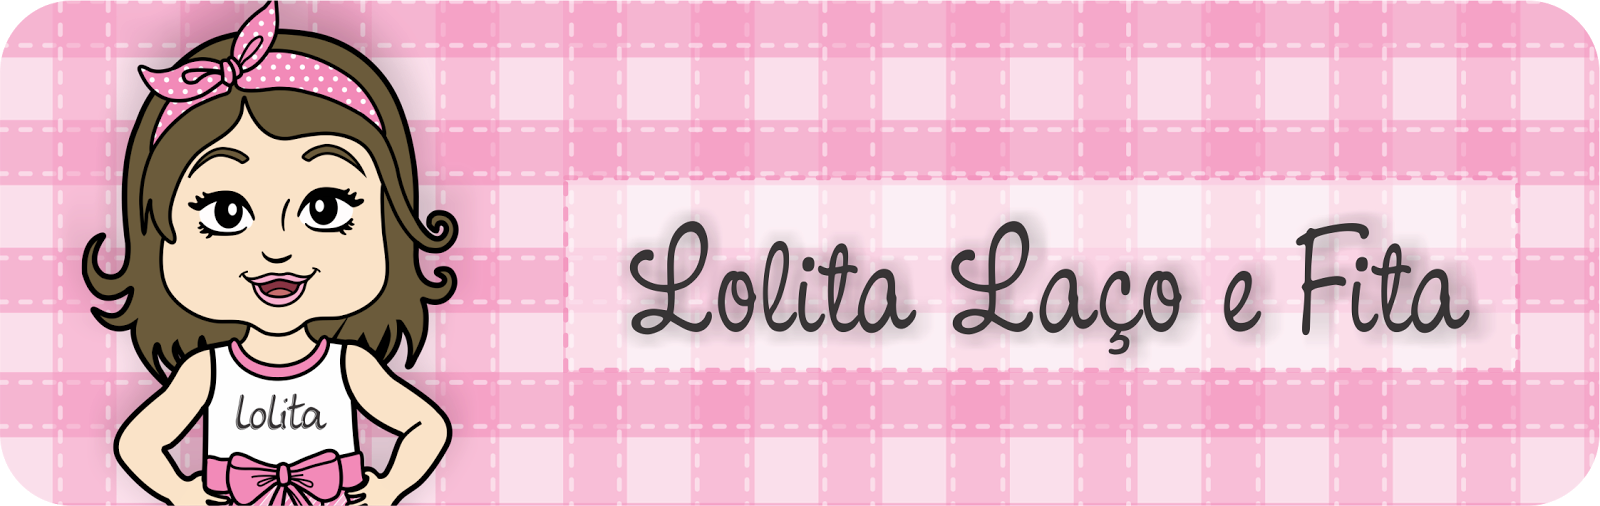 Lolita, laço e fita